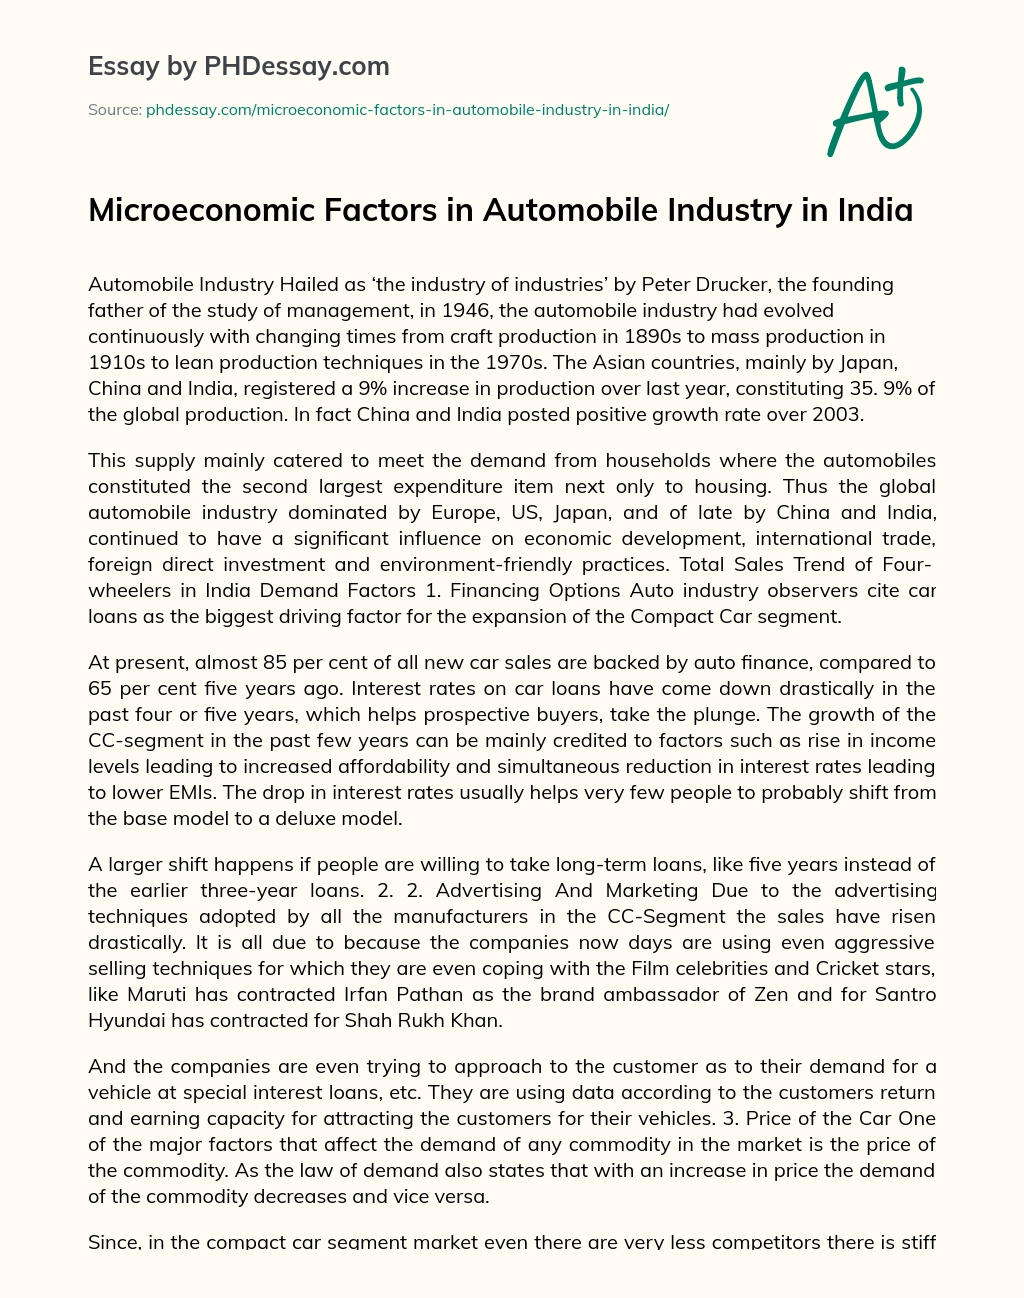 Microeconomic Factors in Automobile Industry in India essay